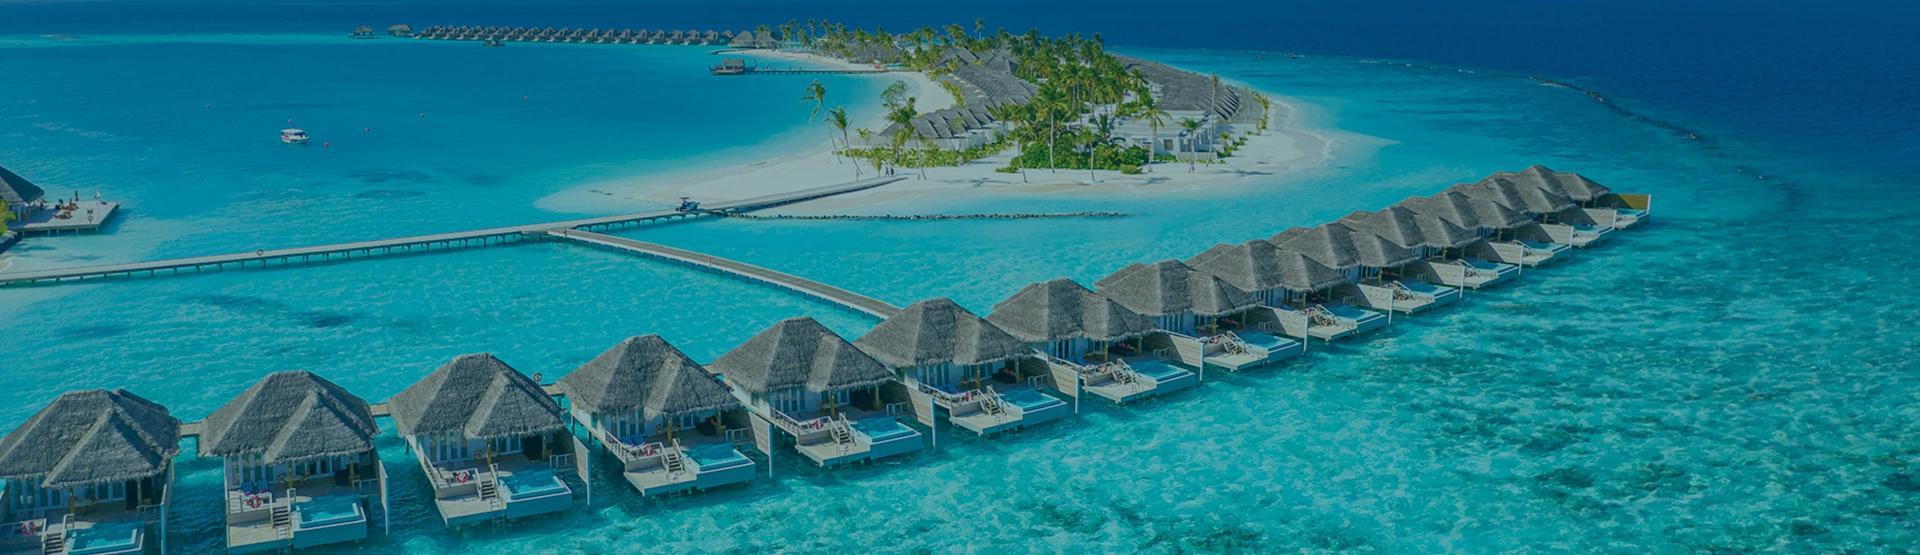 Book Danane to Maldives Flights